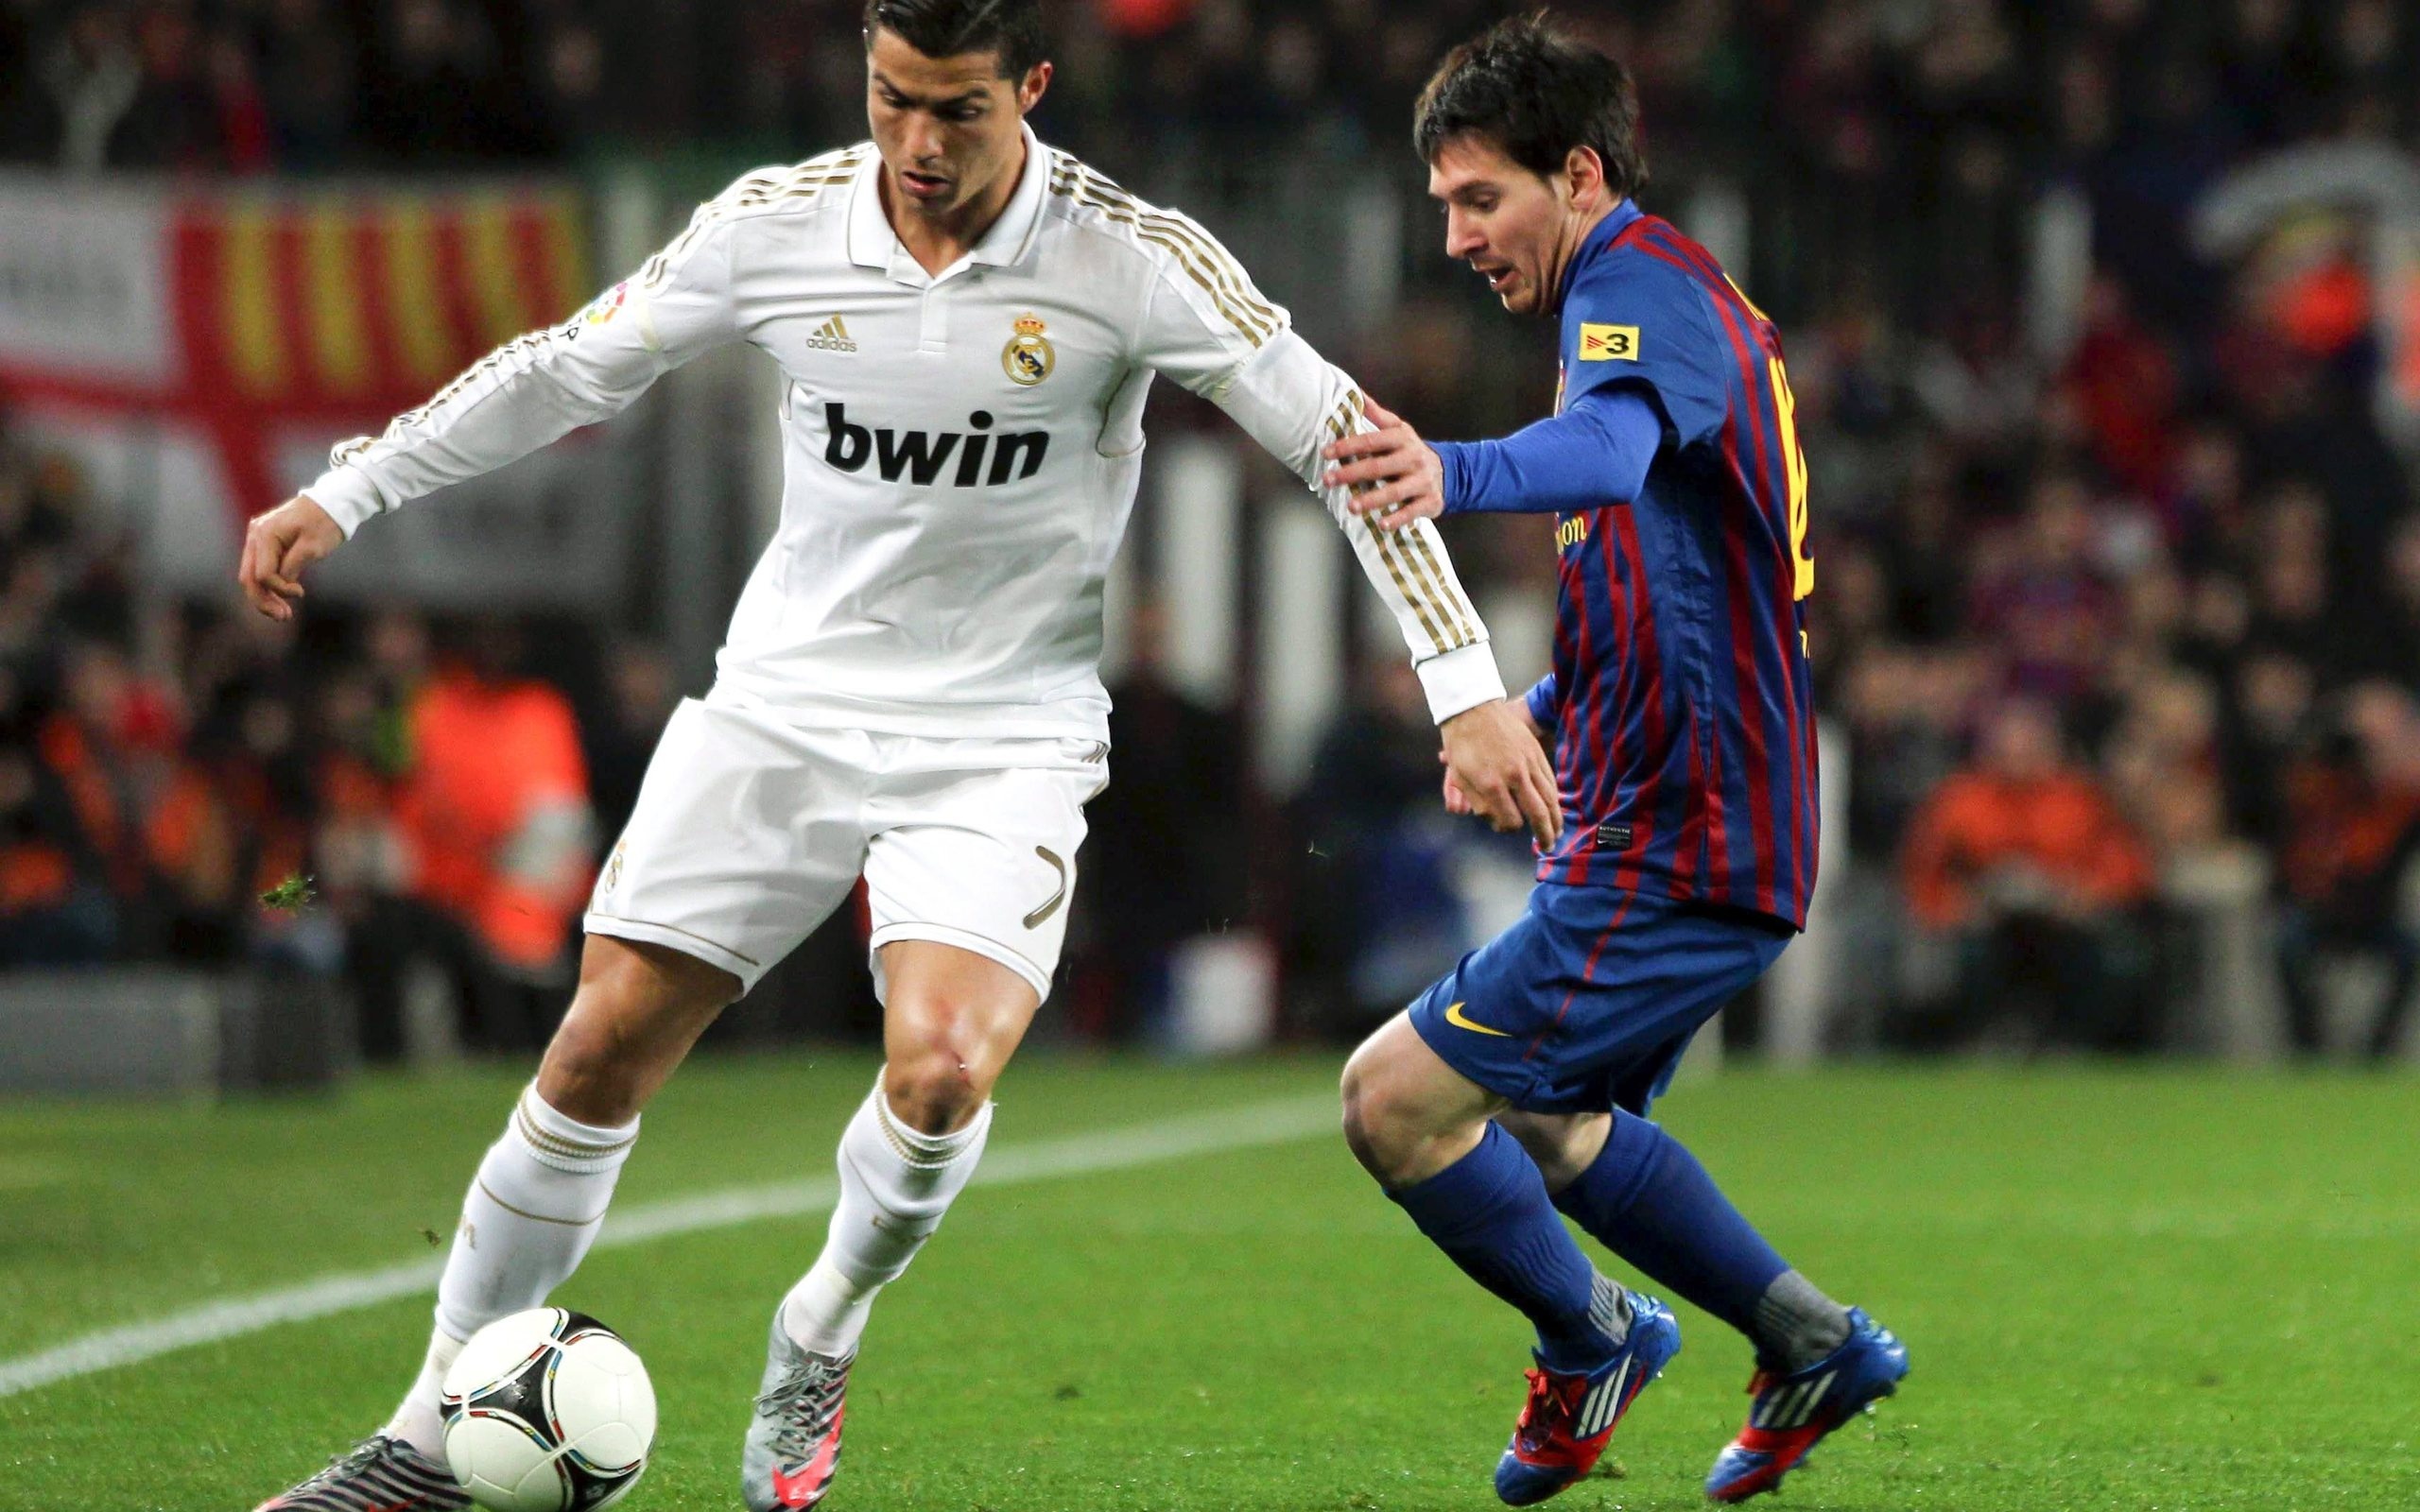 Cristiano Ronaldo vs. Lionel Messi: The goal duel stats part 2